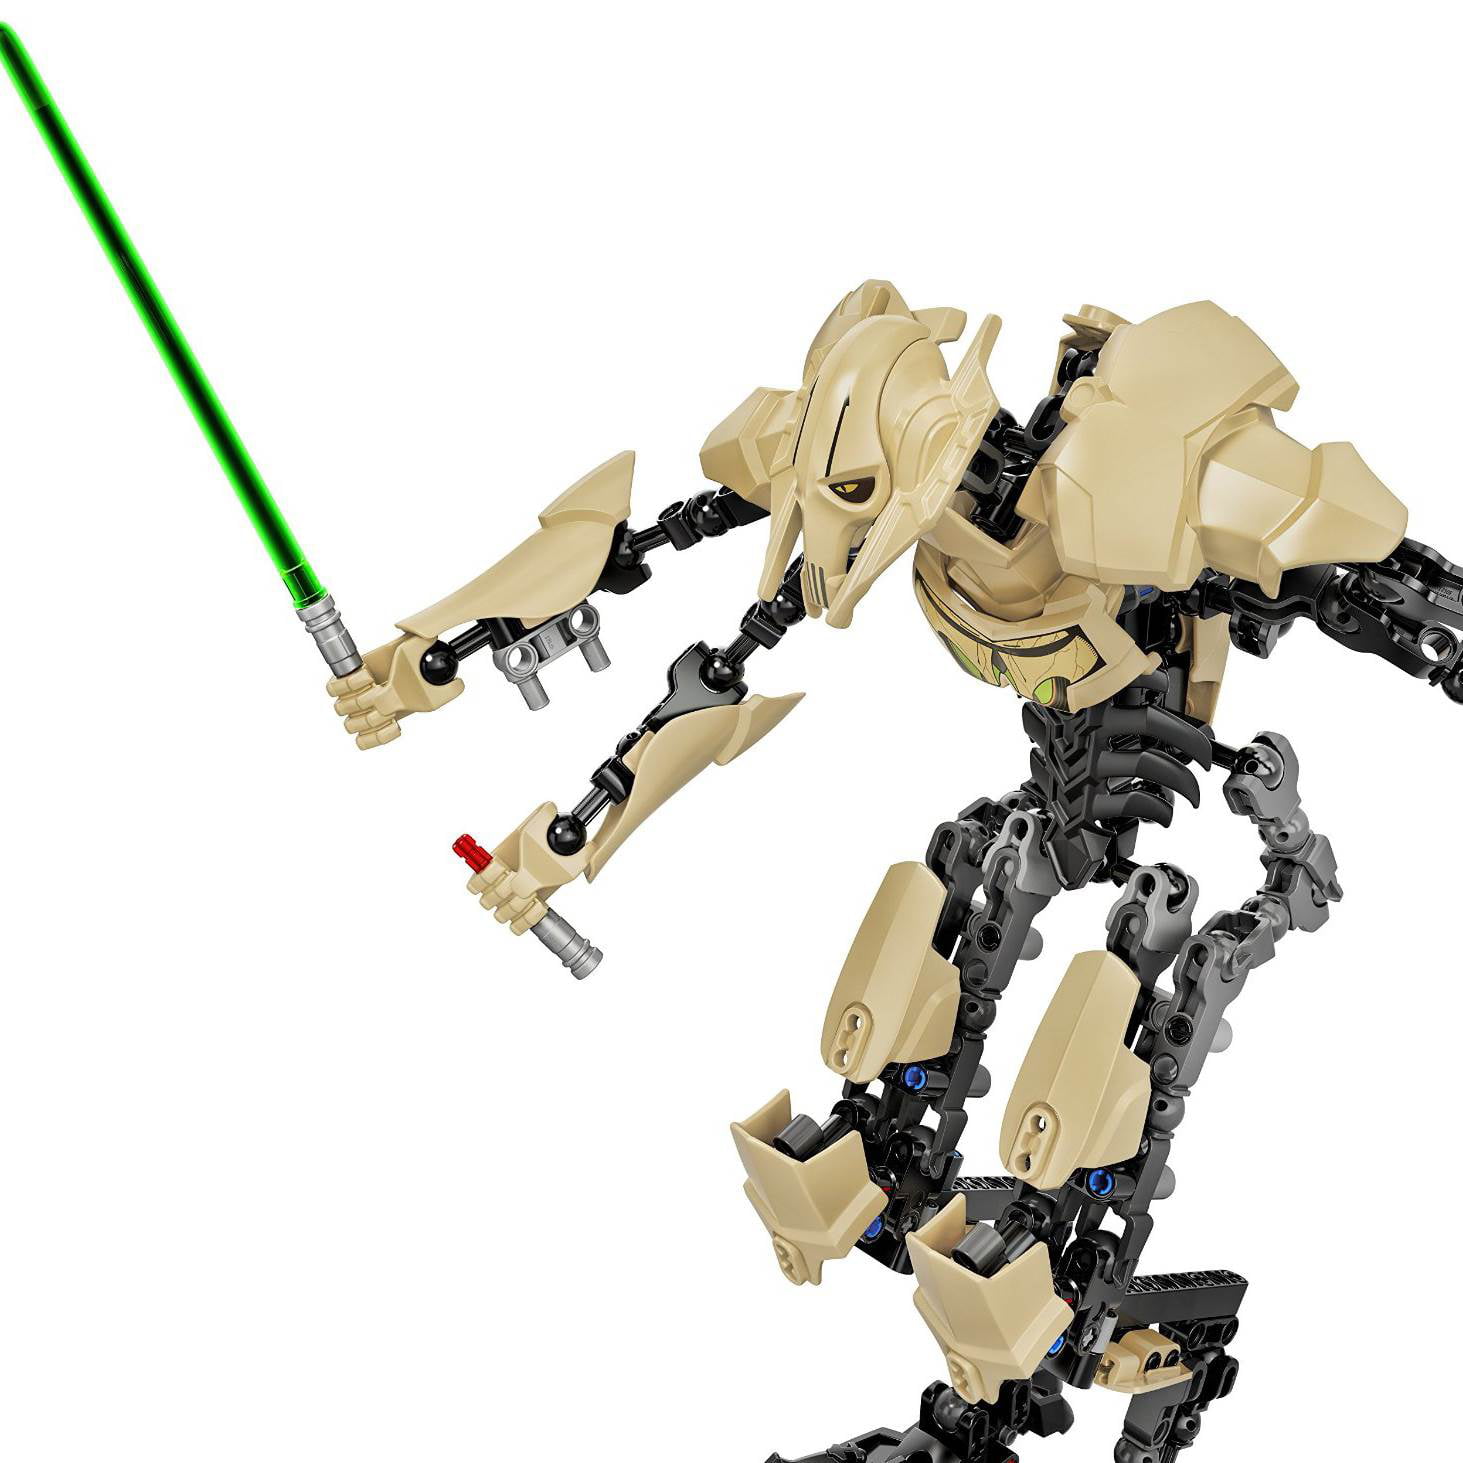 75112 LEGO Star Wars General Grievous 2015 for sale online 